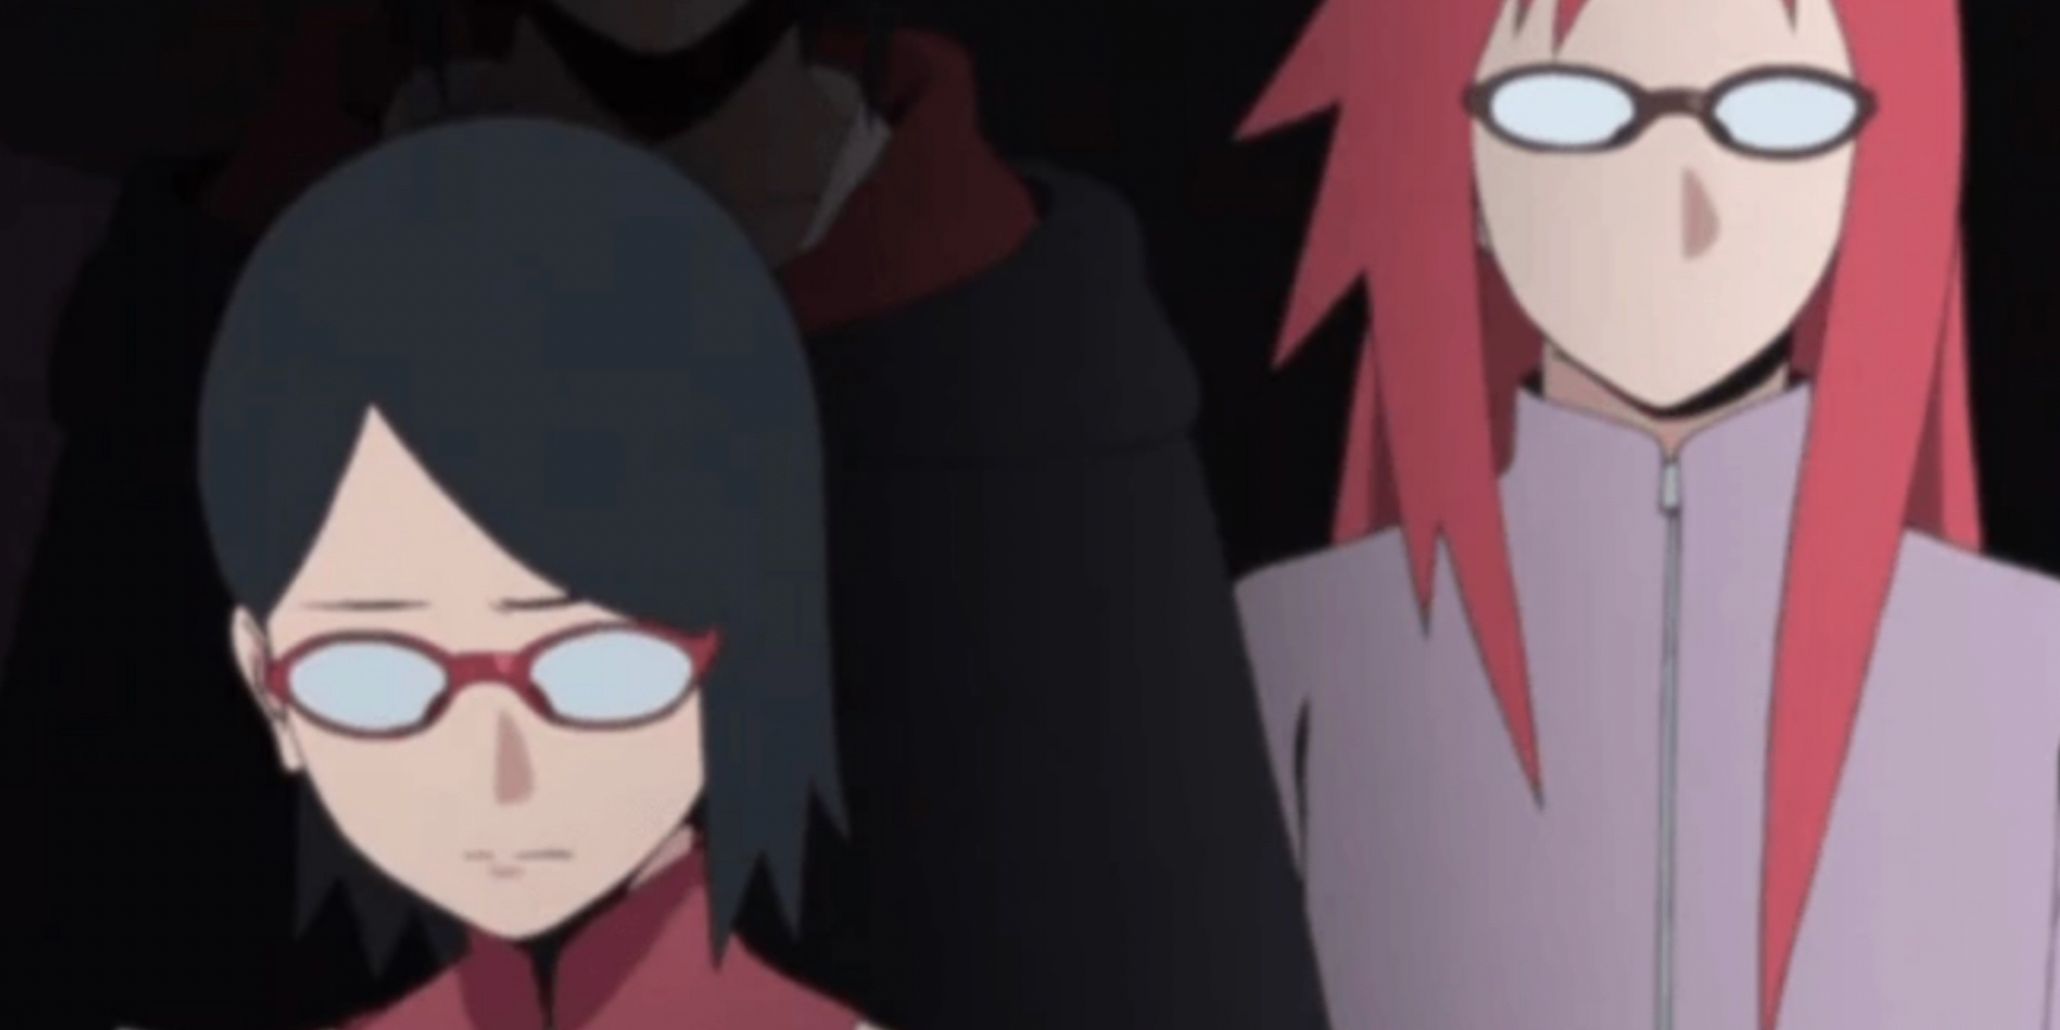 Sasuke and Karin as they appear in Naruto Shippuden are behind Sarada in a Boruto scene